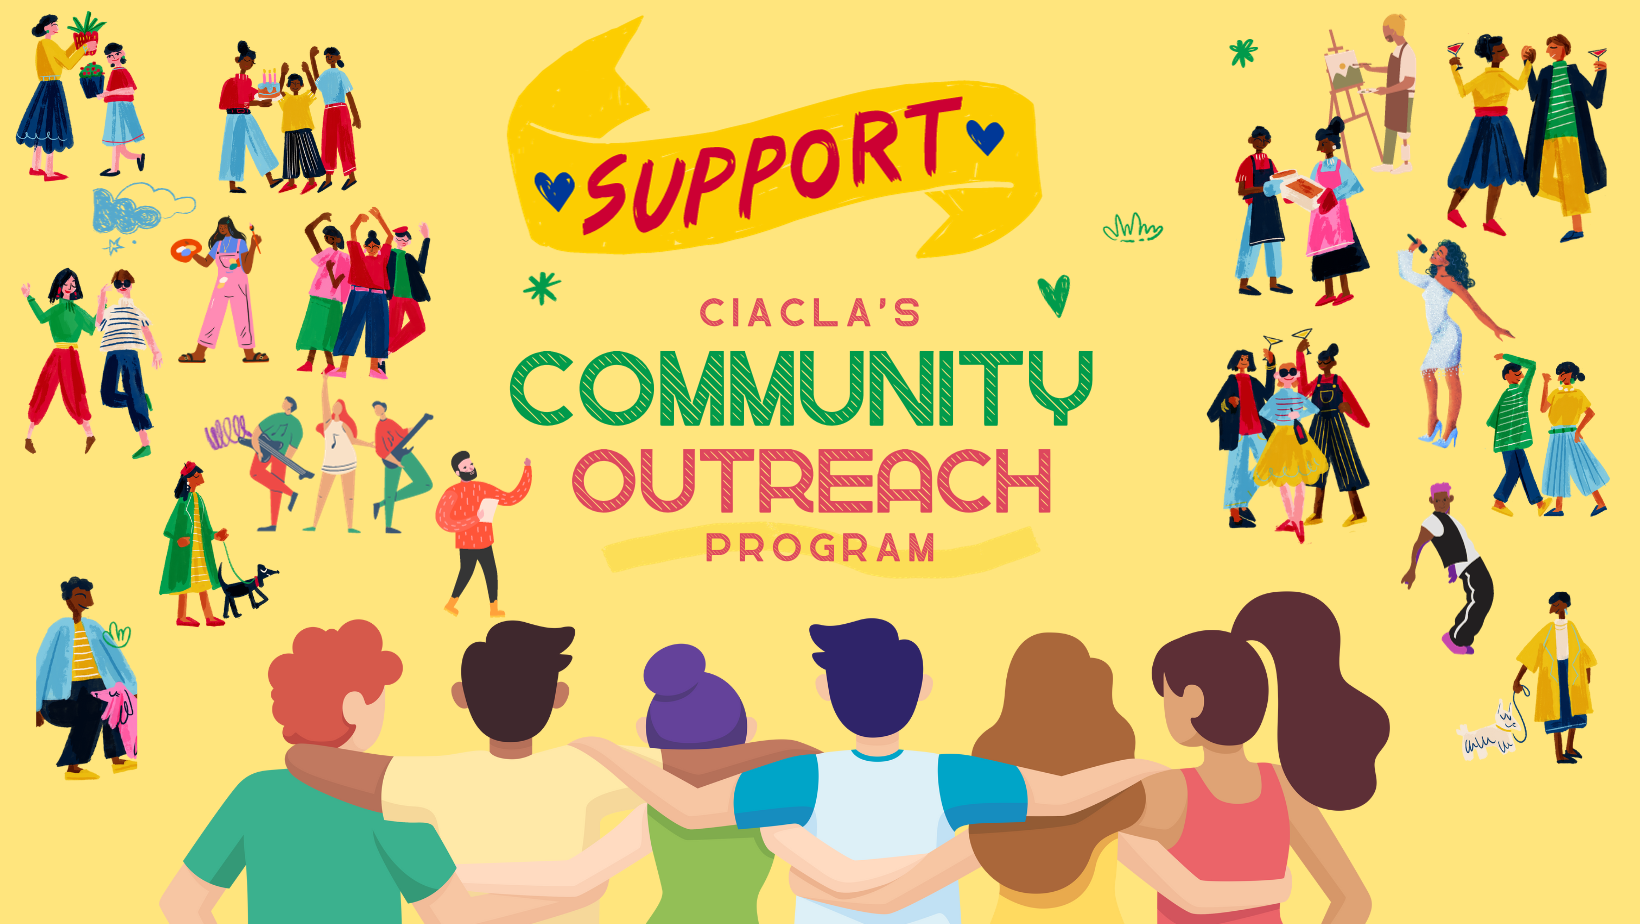 Support CIACLA's Community Outreach Program